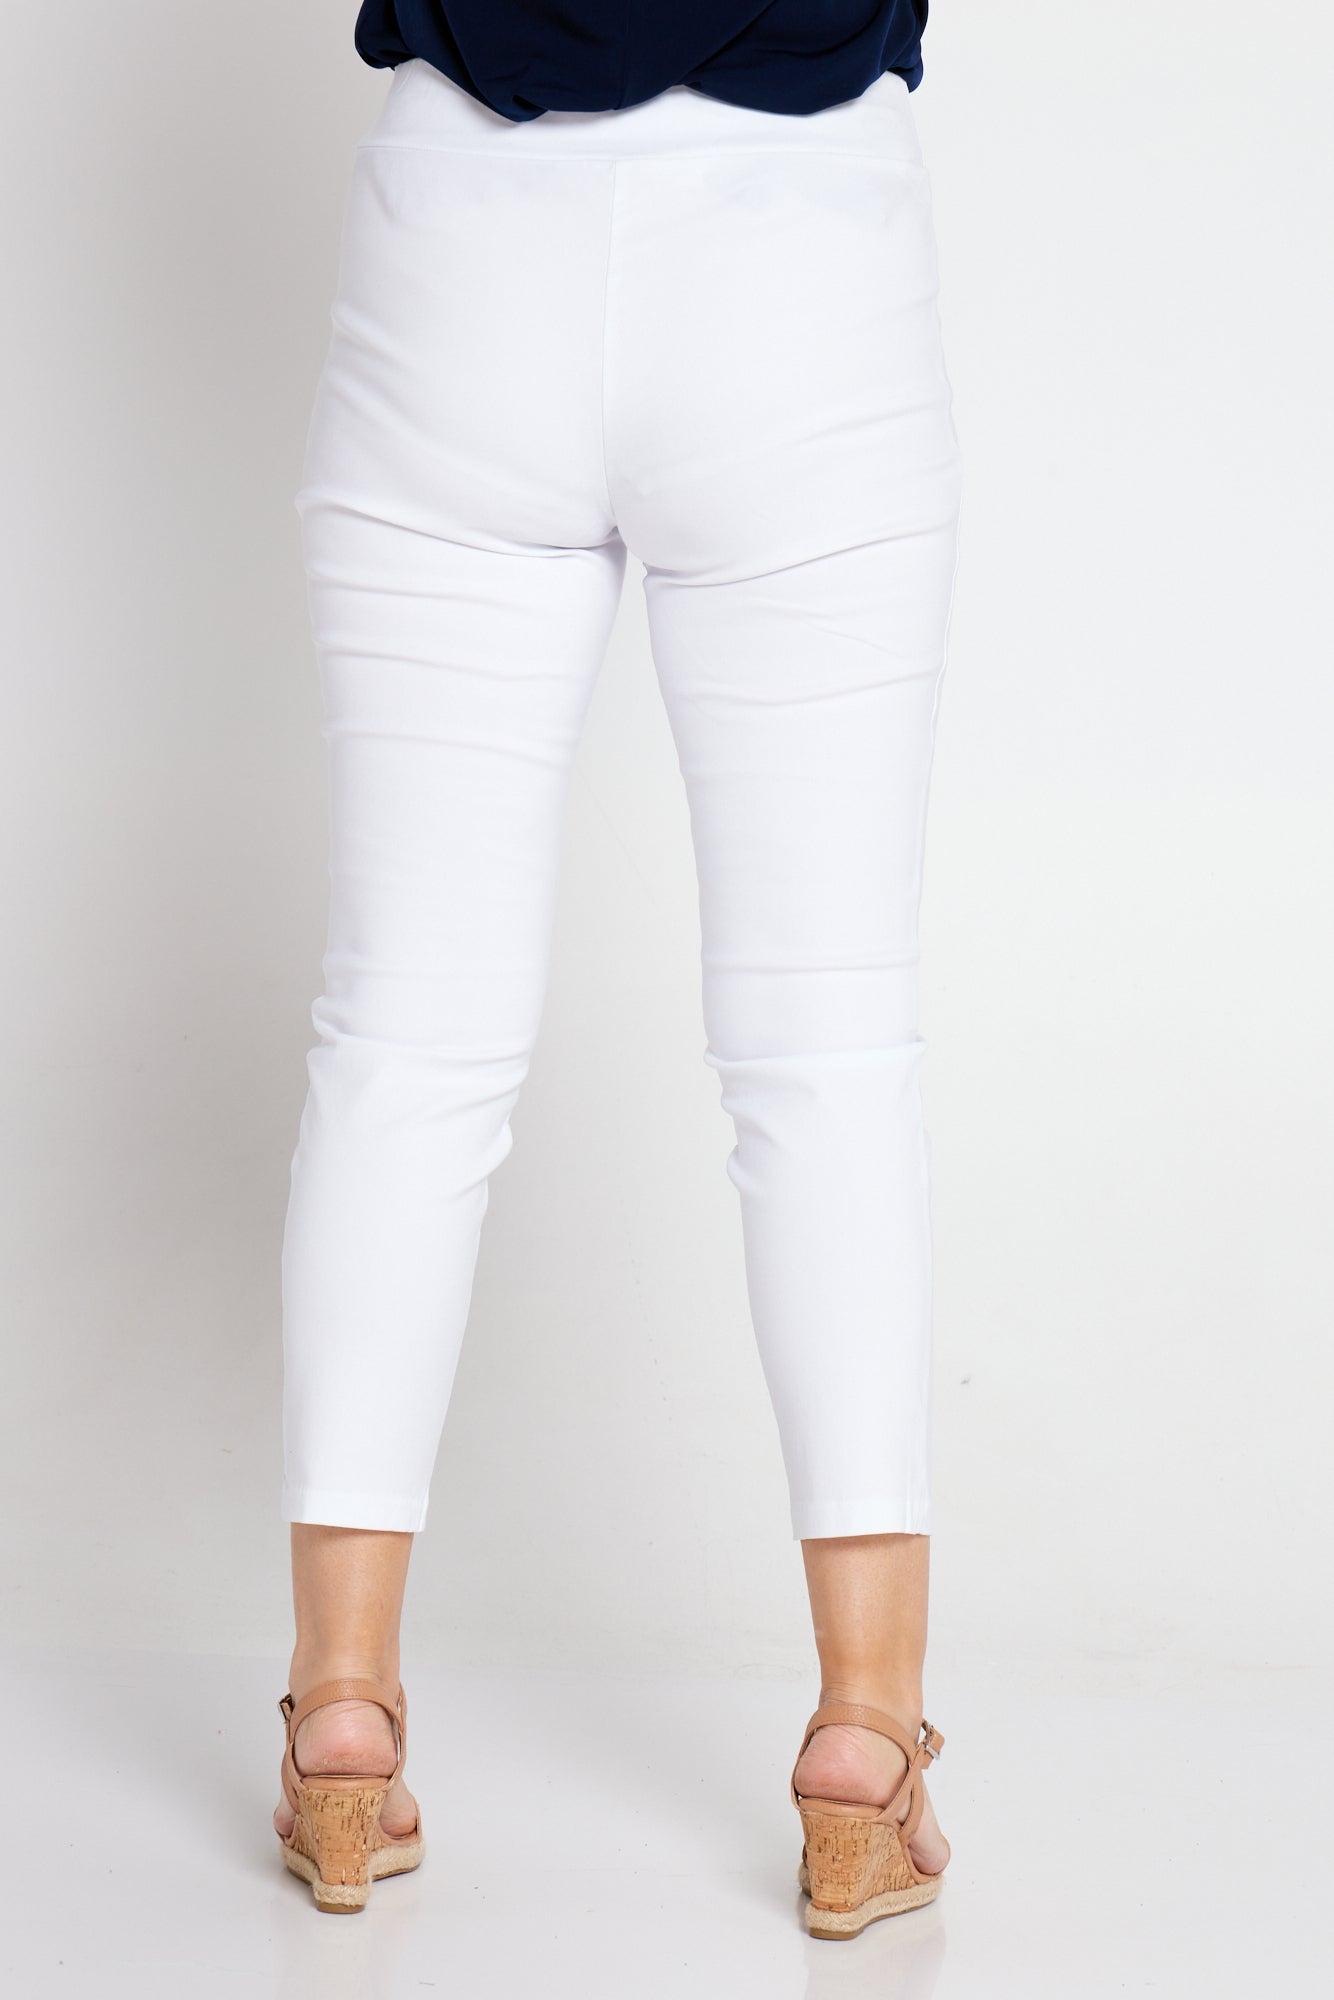 Moira Bengaline Pants - White